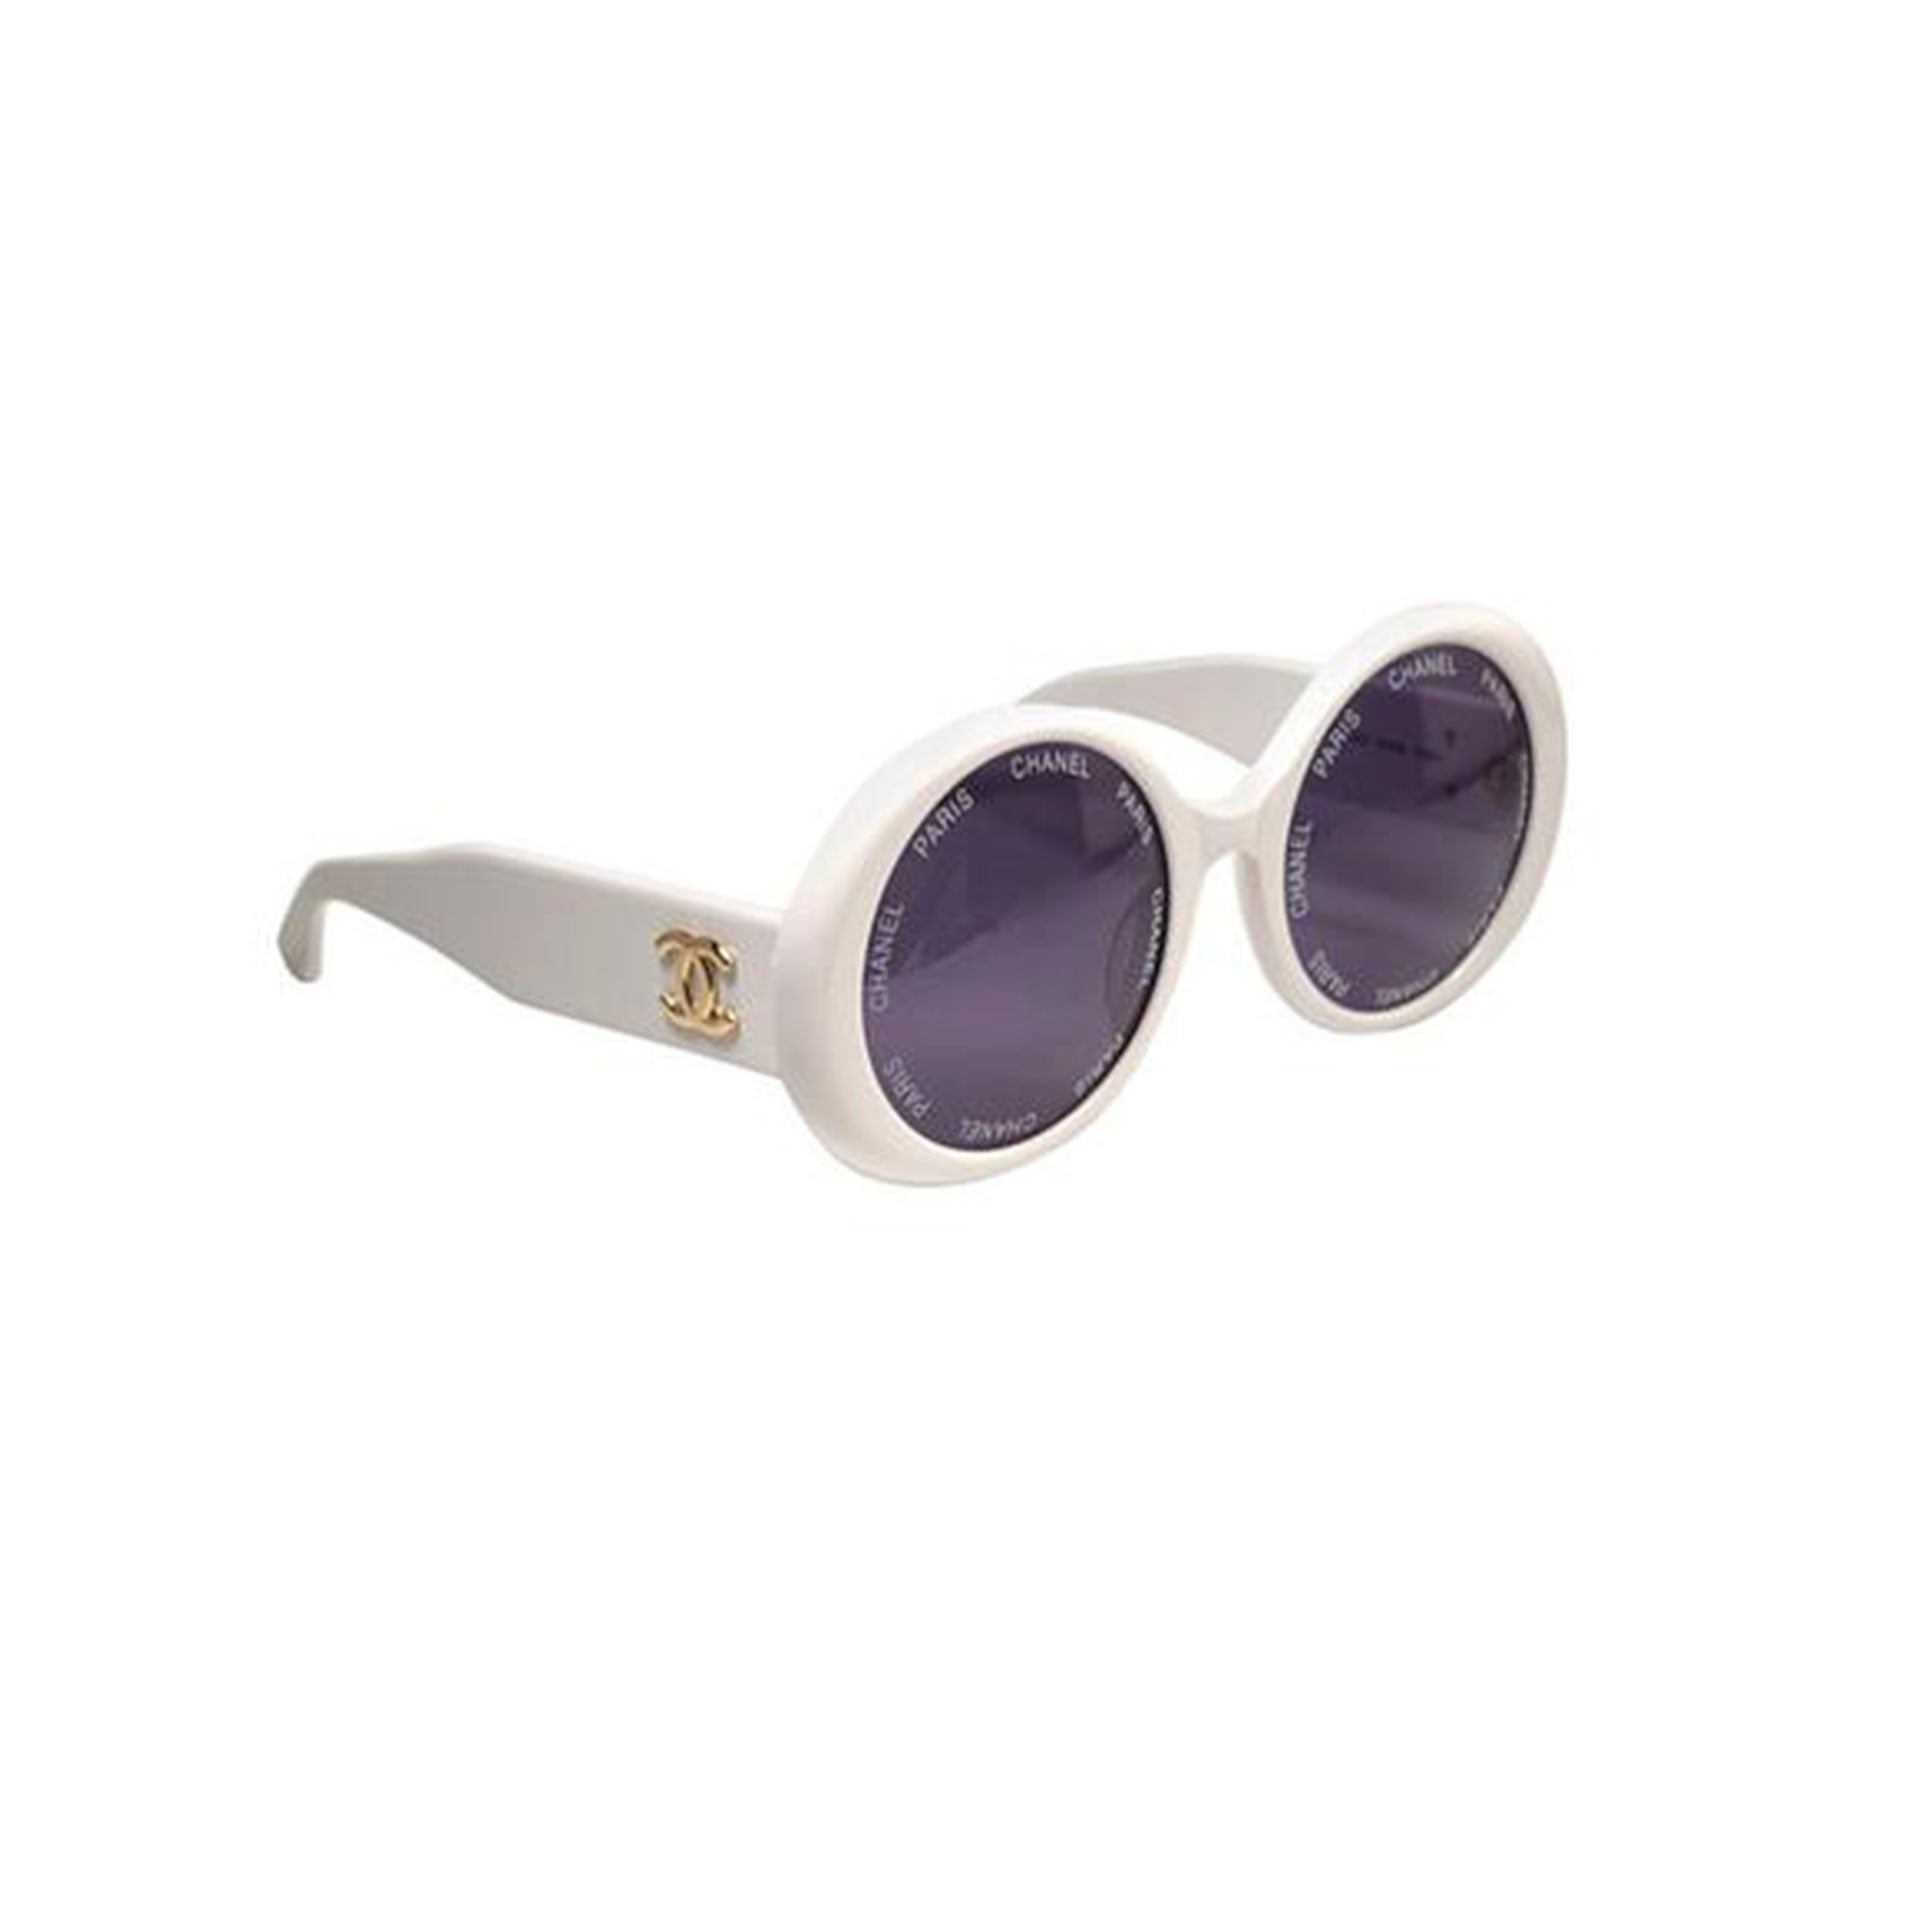 chanel round logo sunglasses